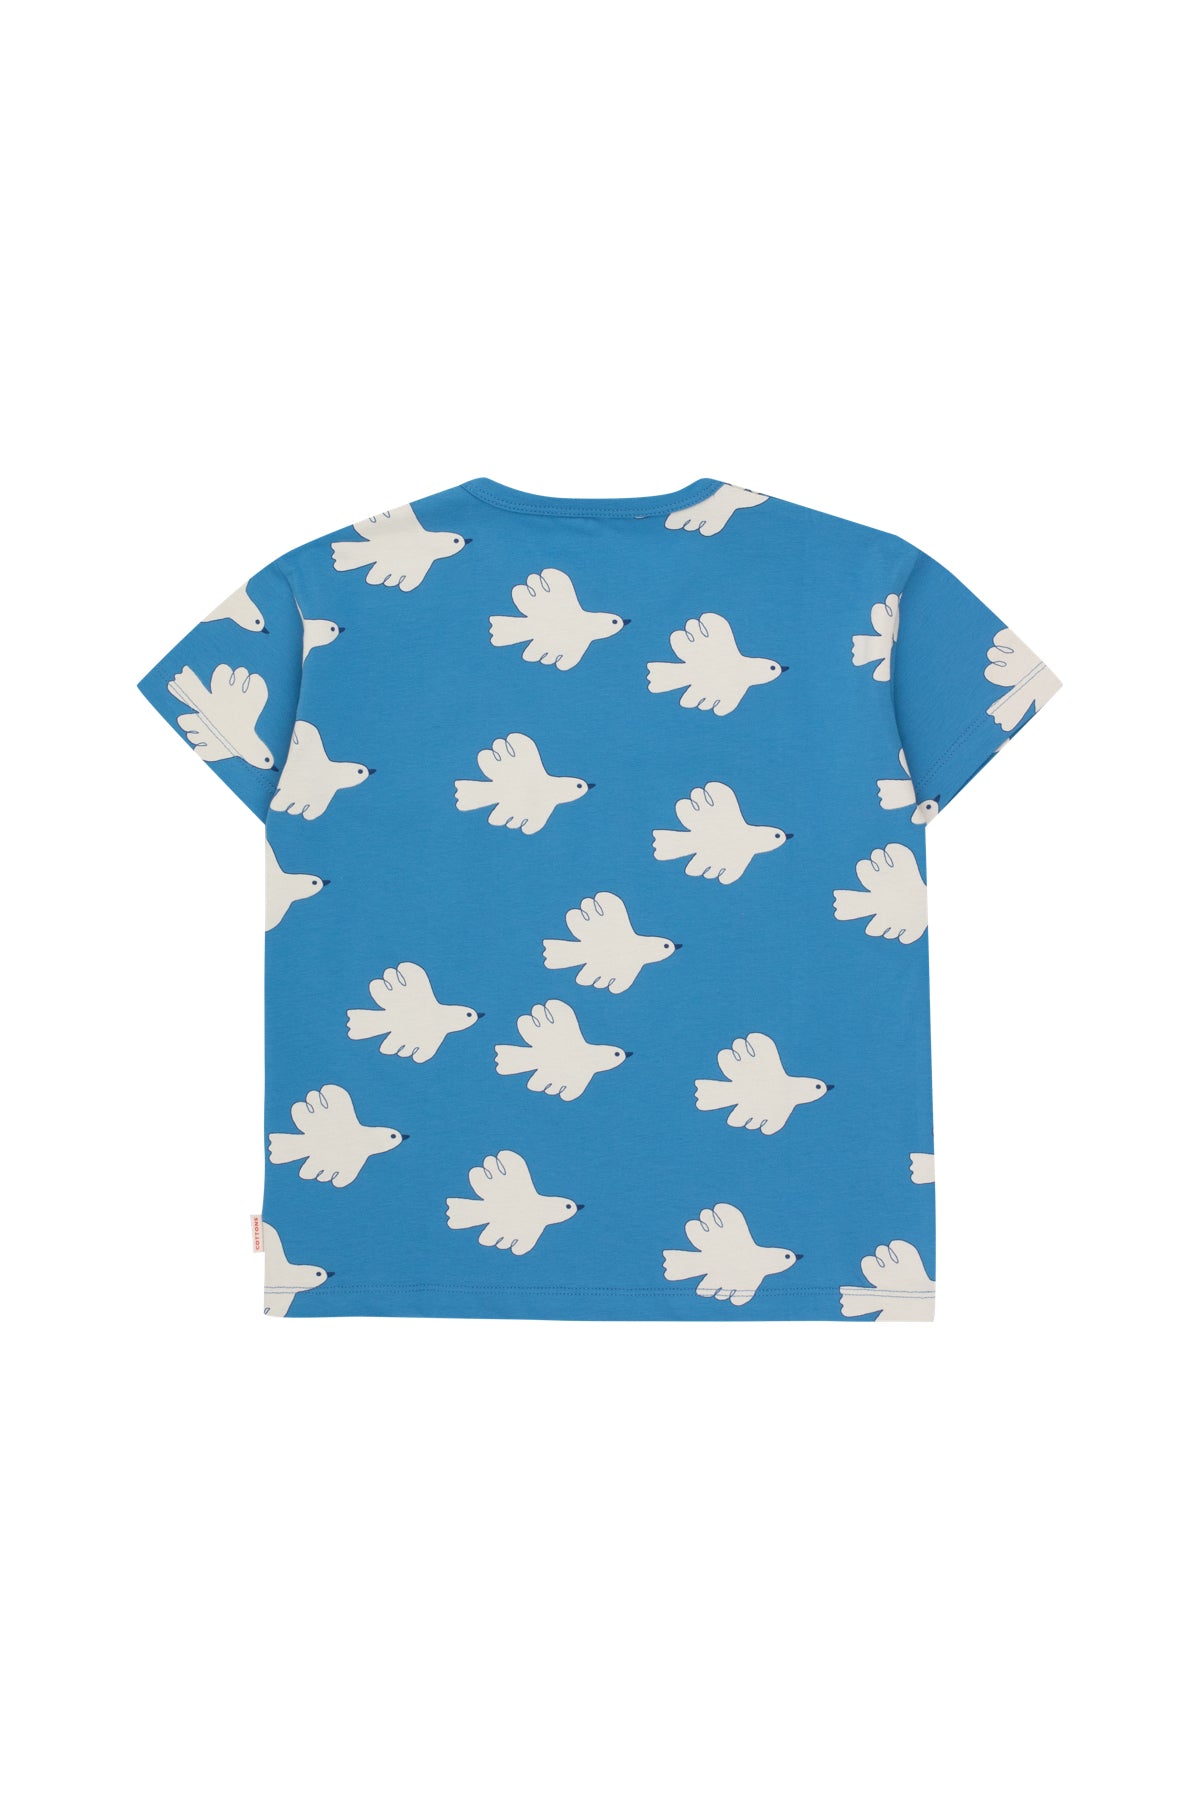 Doves T-Shirt - blue